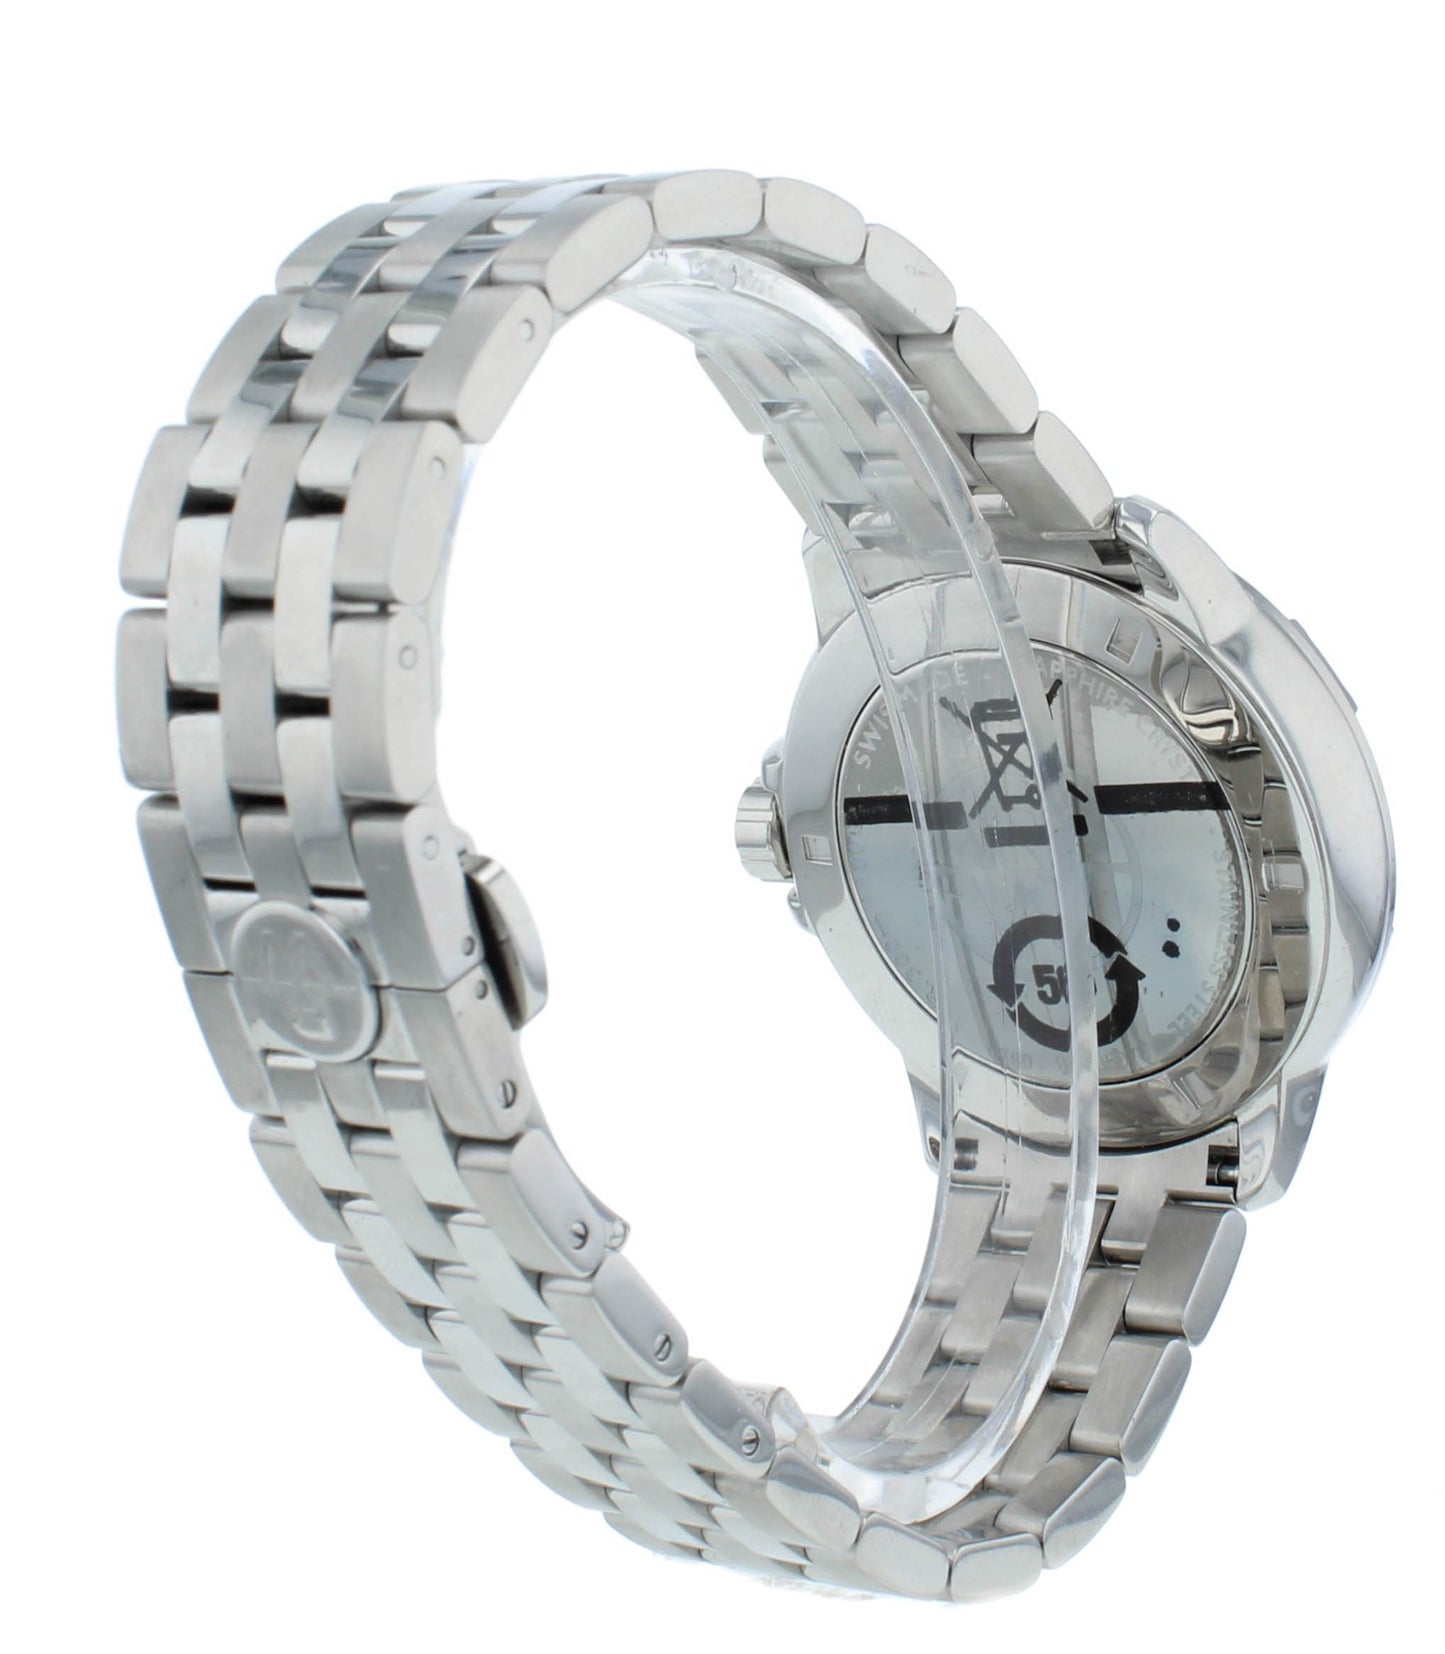 Raymond Weil Tango Grey Dial 41mm Steel Quartz Men's Watch 8160-ST2-60001